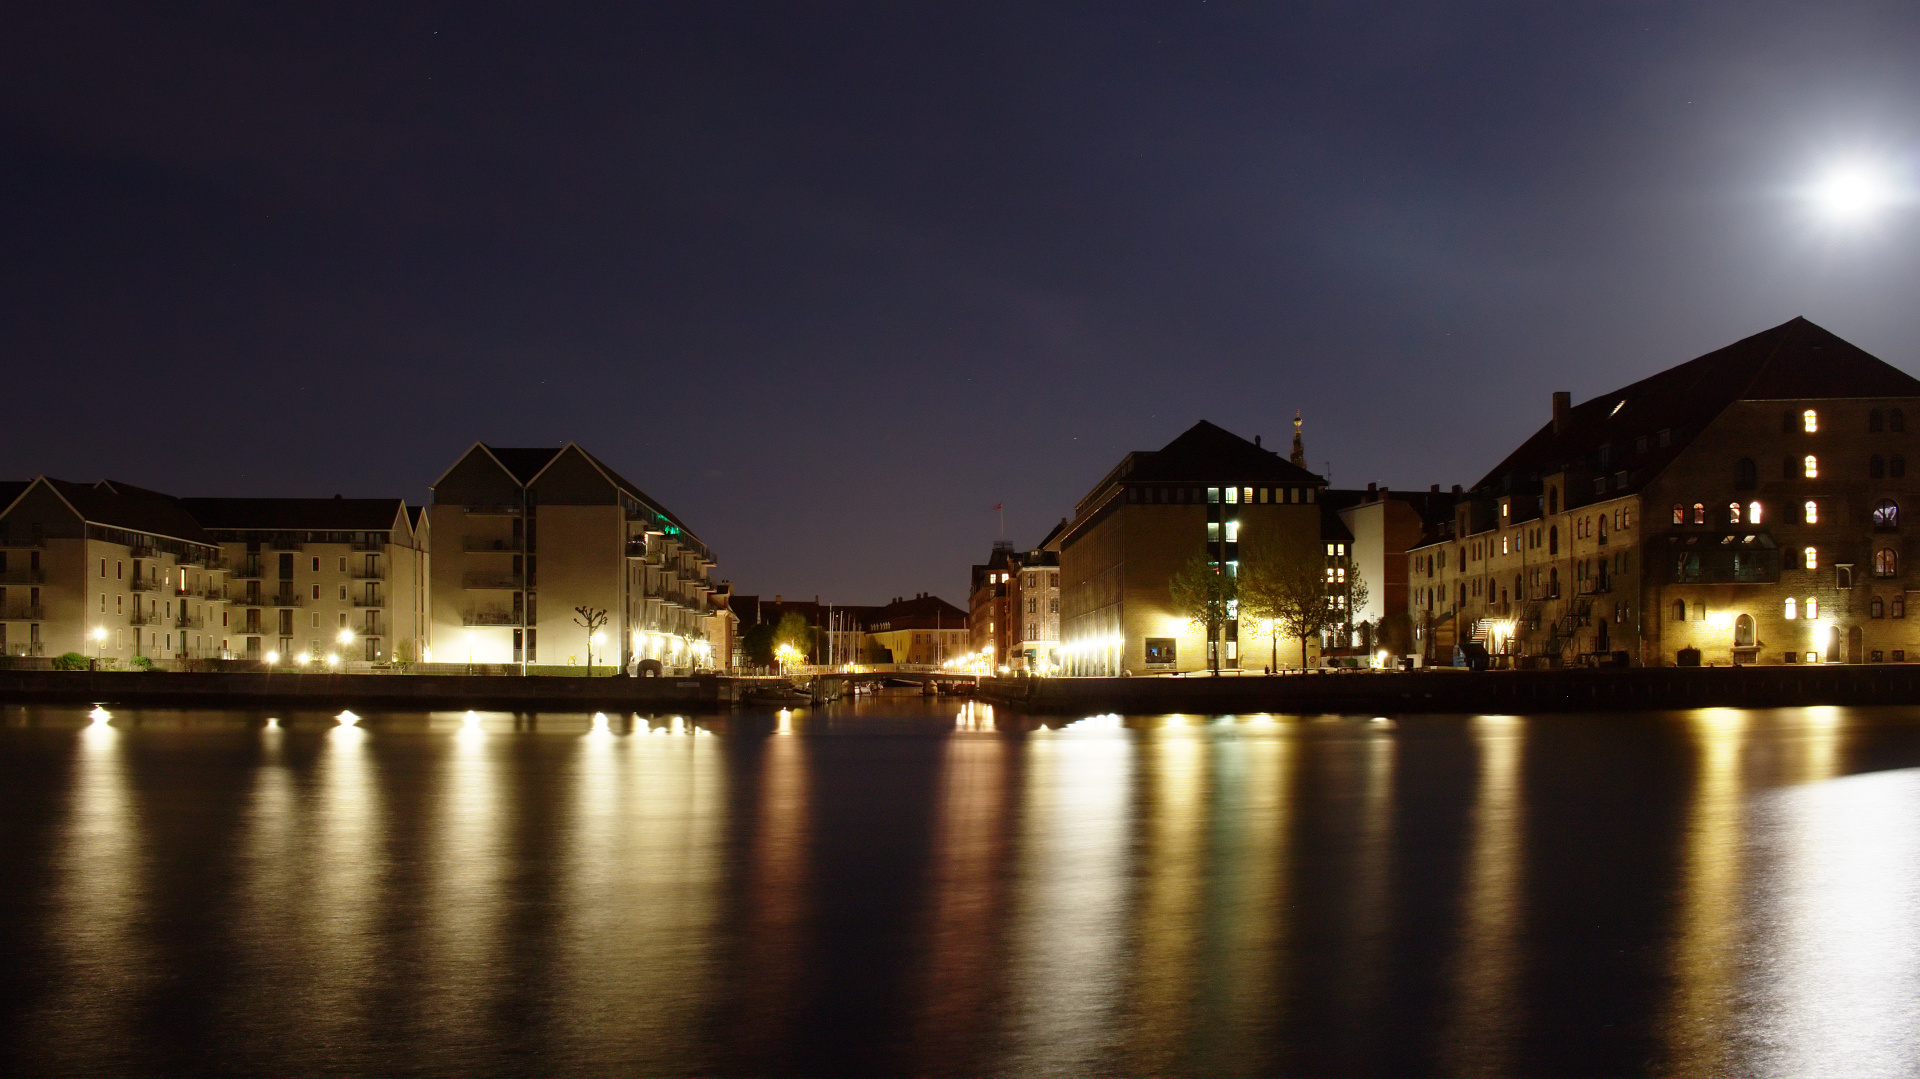 Christianhavns Kanal from Havnepromenade (Travels » Copenhagen » The City At Night)